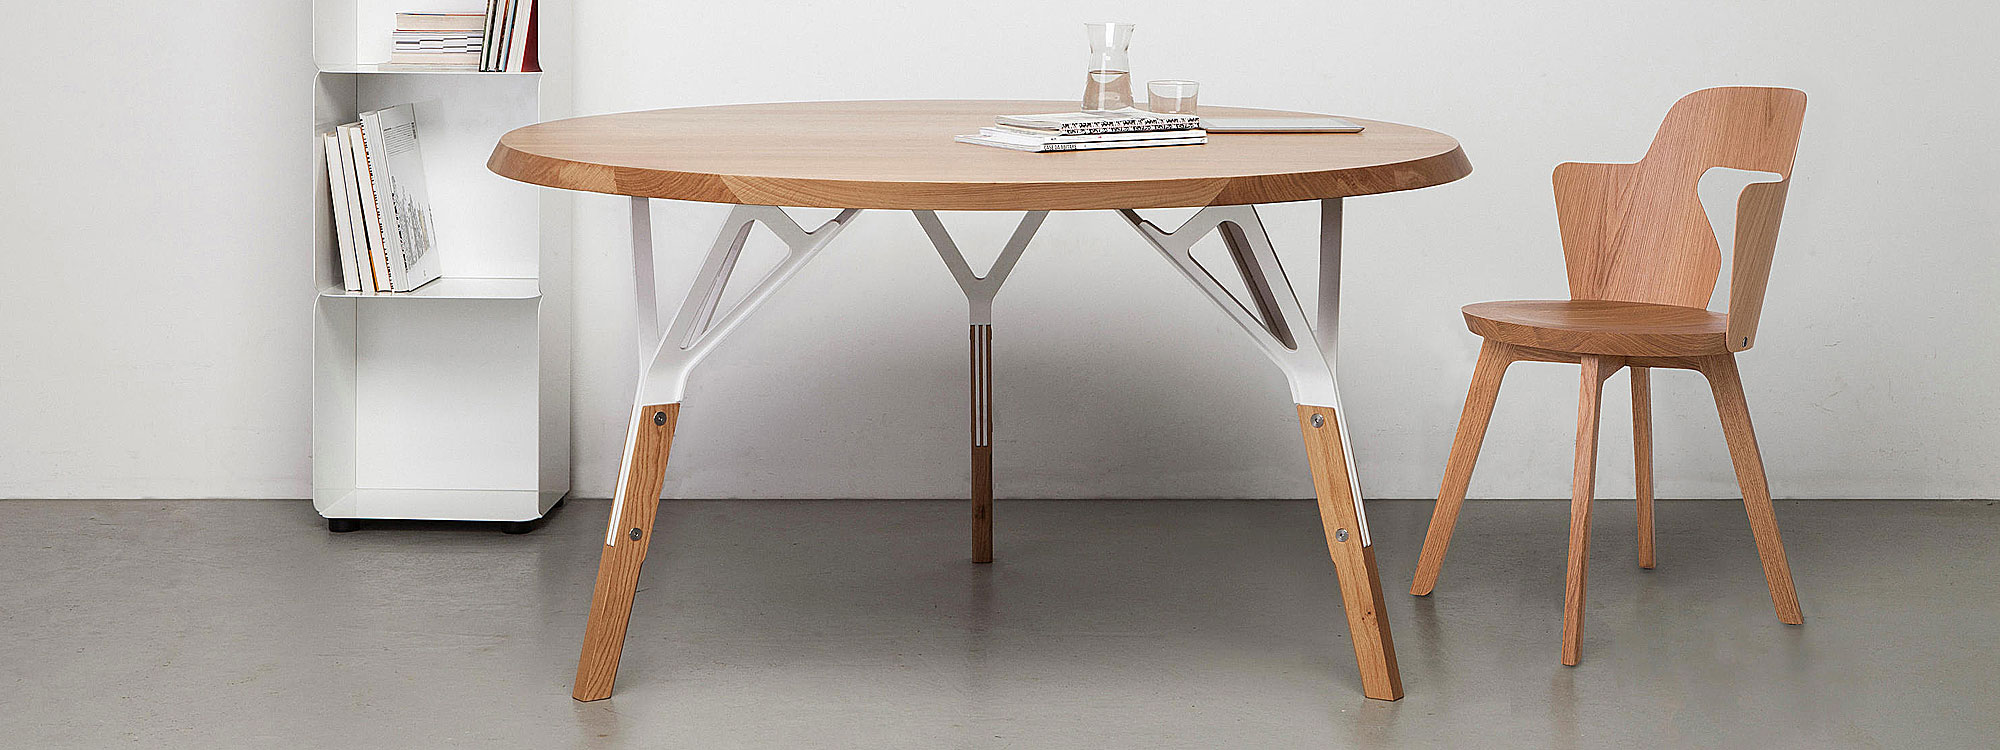 Quodes Stammplatz Dining Armchair & Table. Contemporary Interior Chair - Alfredo Häberli. Solid Oak/ Oak Veneer. Design Furniture Company.